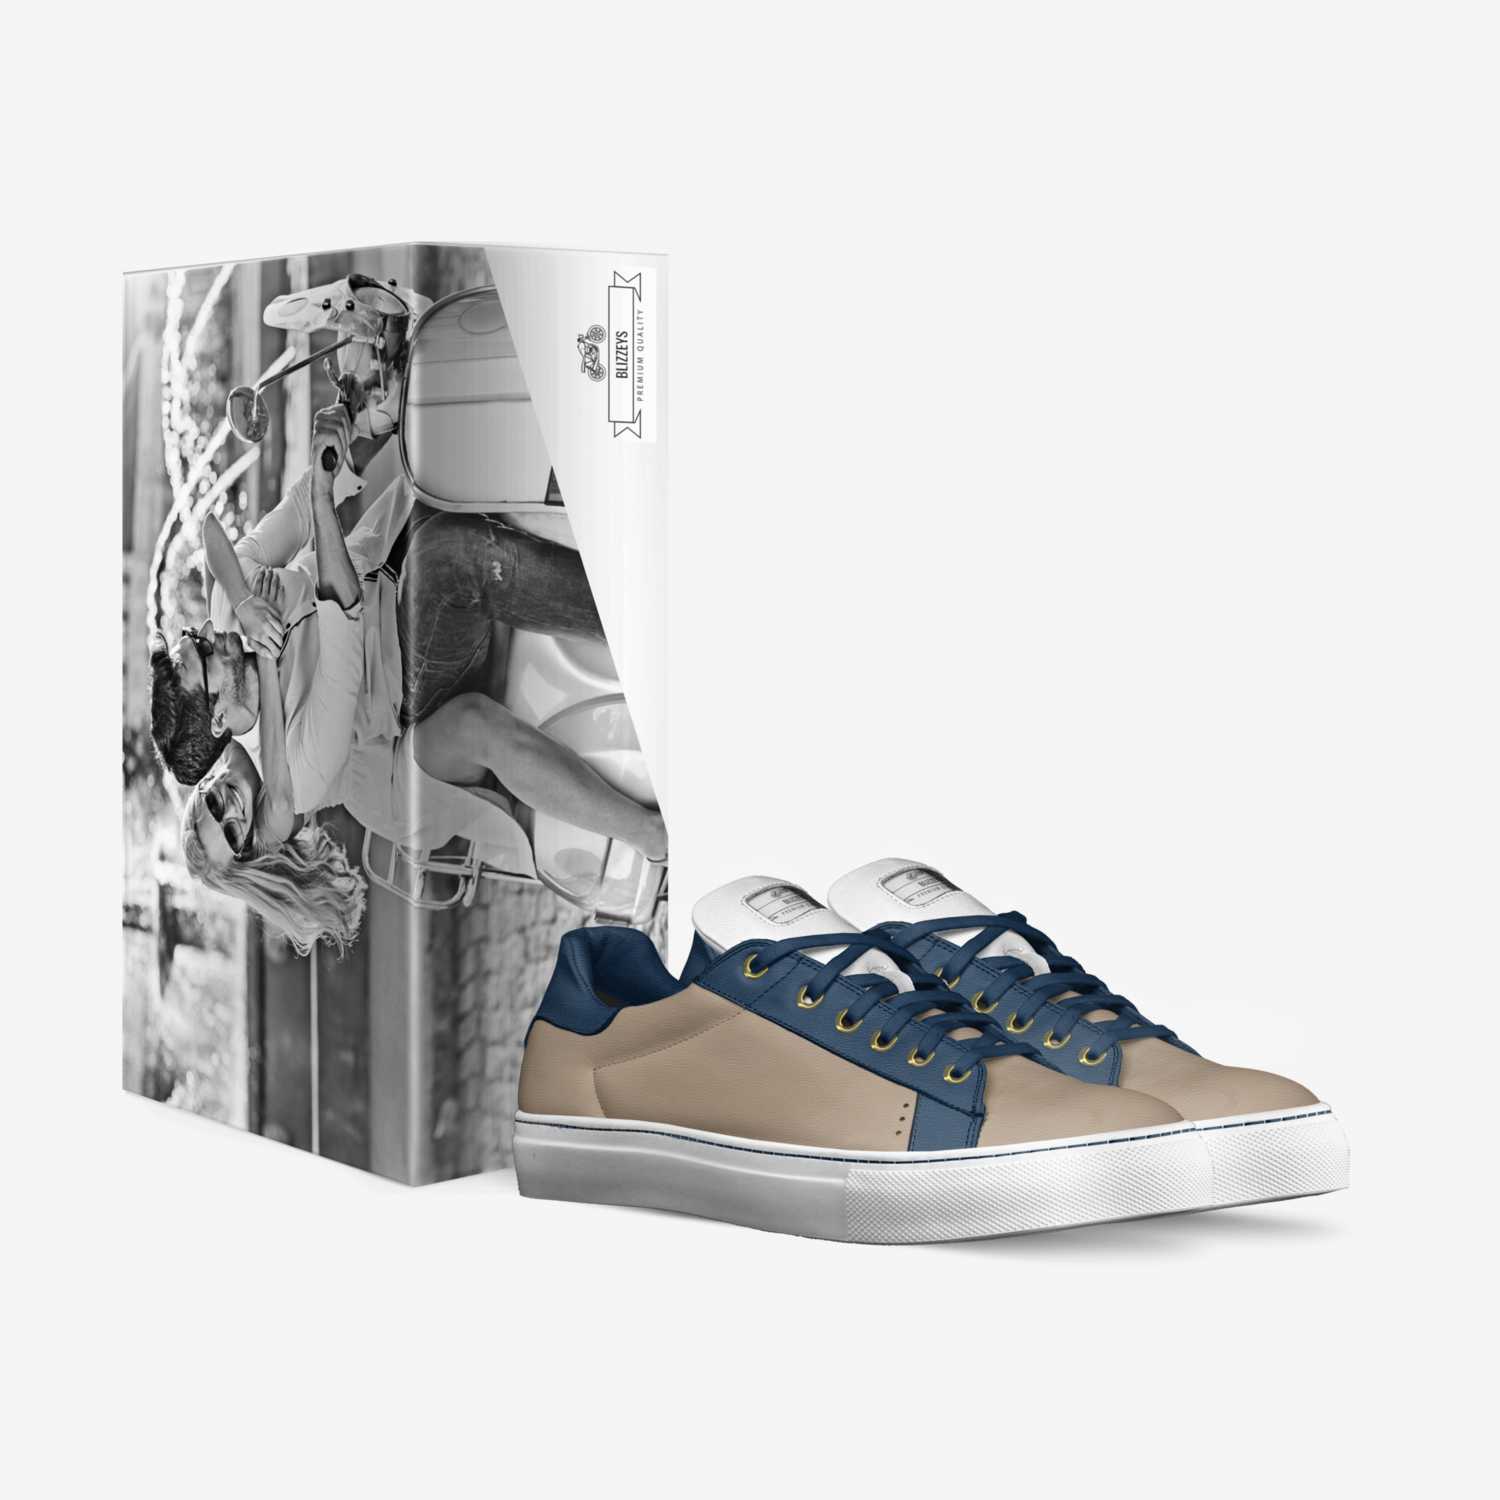 blizzeys custom made in Italy shoes by Nikolaj Thorup | Box view